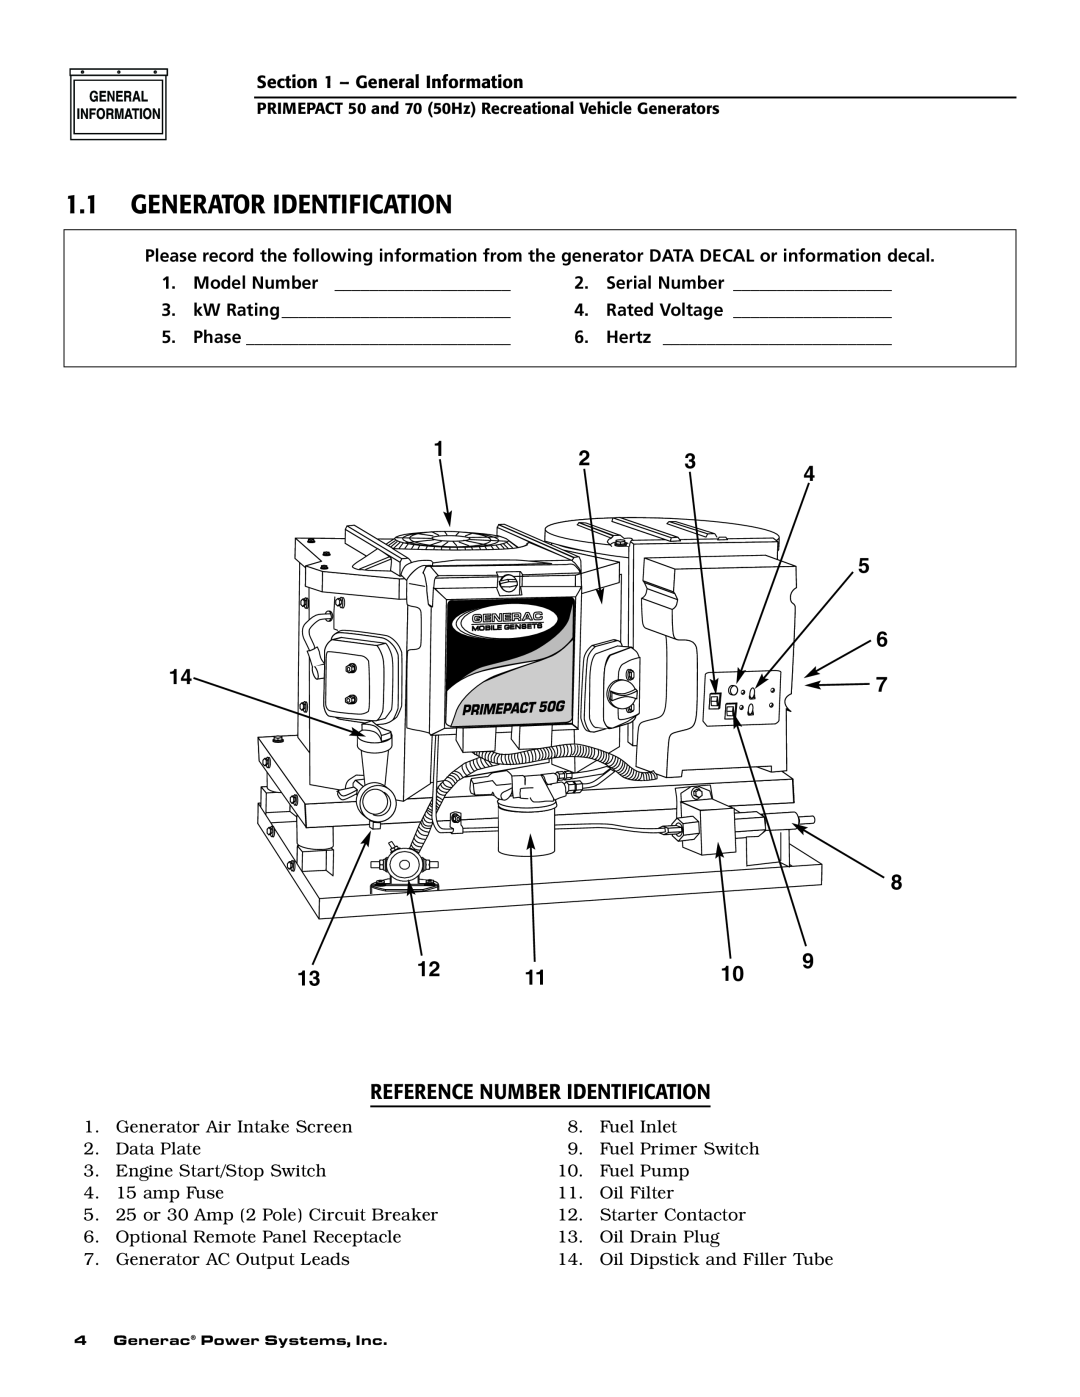 Generac 00784-2, 09290-4 owner manual Generator Identification, Reference Number Identification 